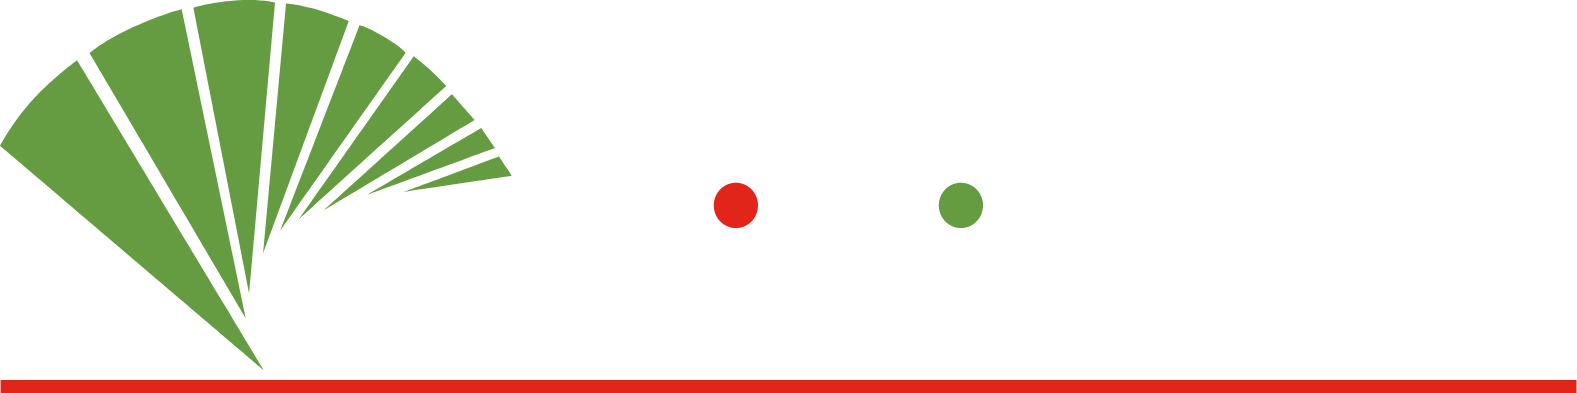 Unicaja Banco logo large for dark backgrounds (transparent PNG)